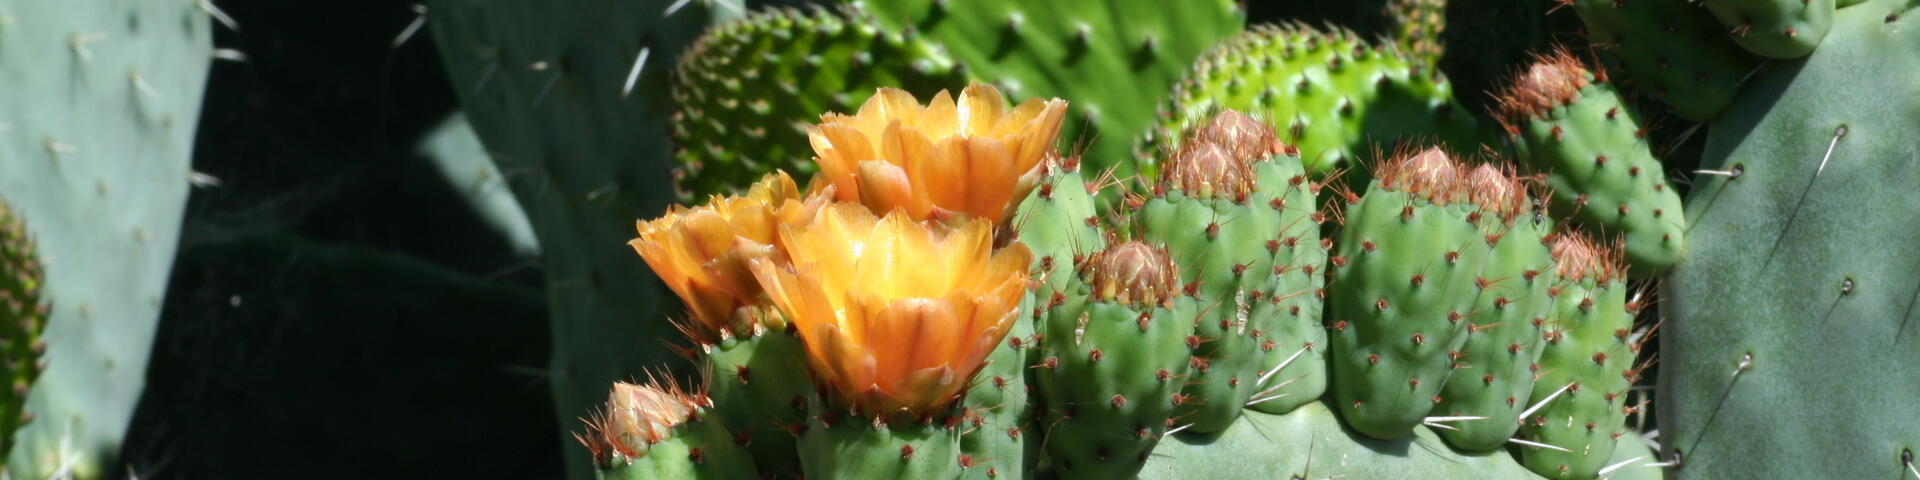 Andalusien-Kaktus